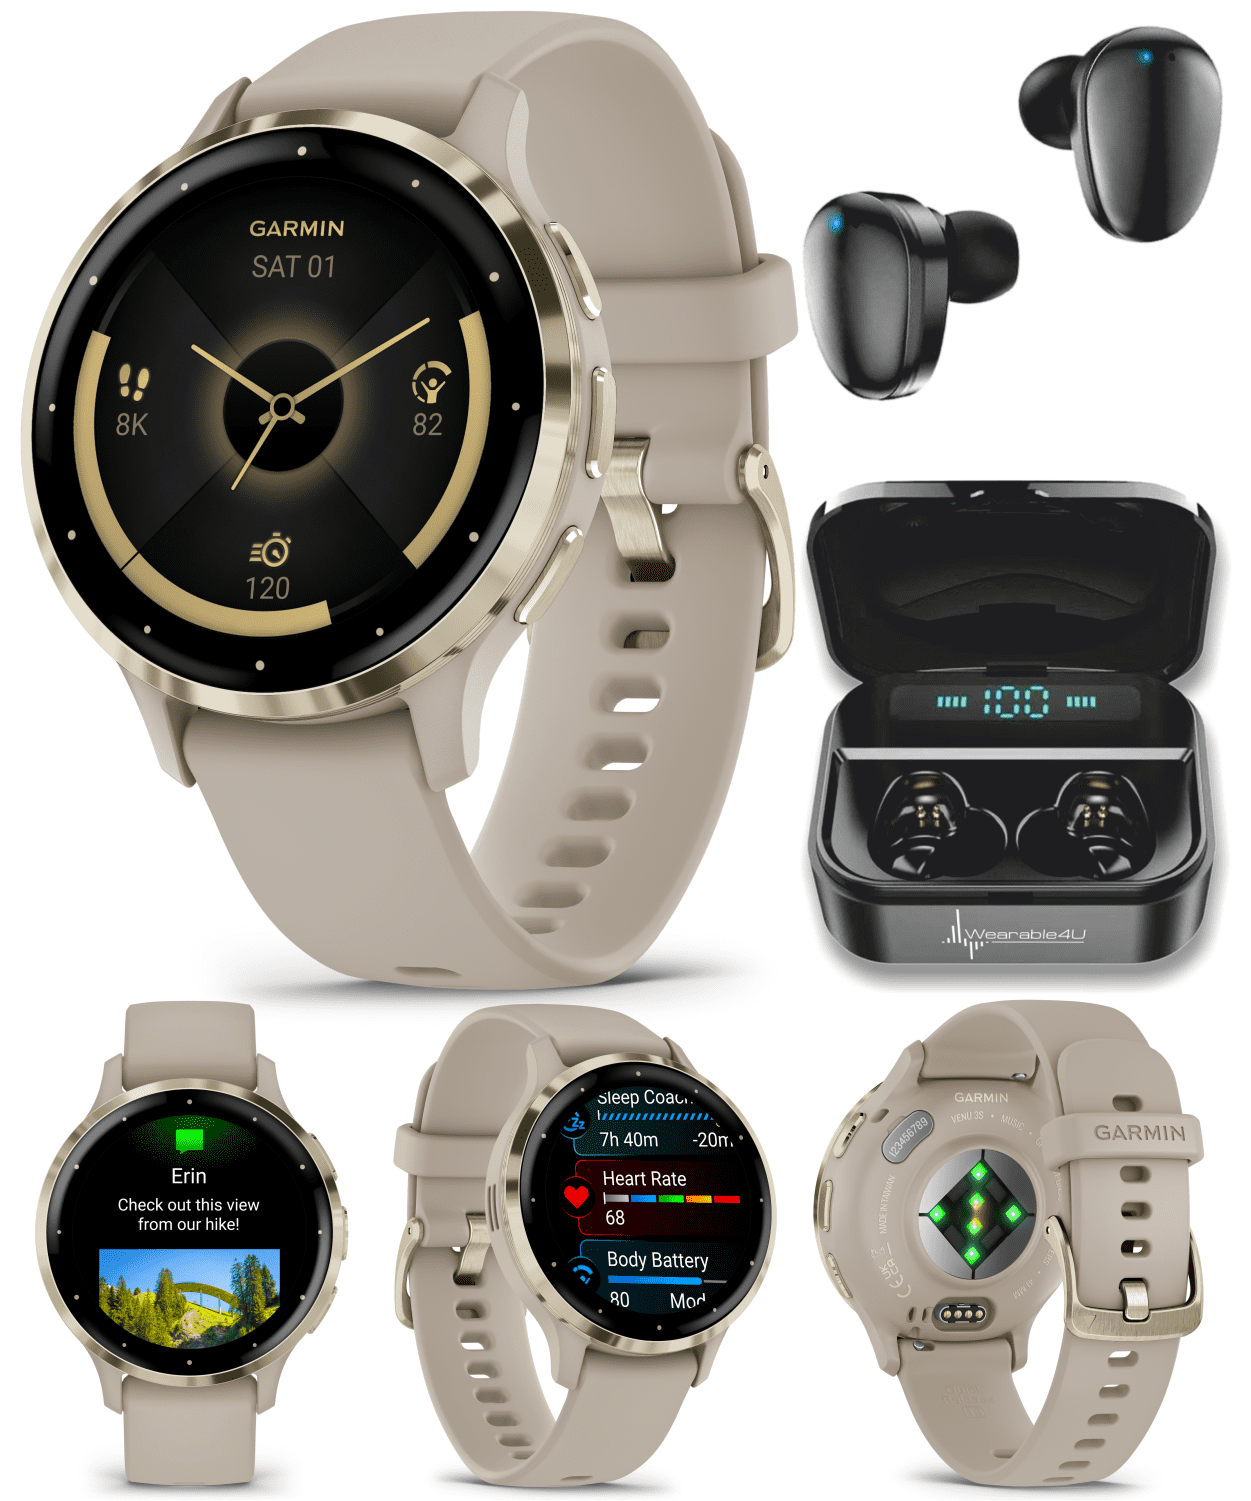 Garmin Venu 3 Series GPS Smartwatch AMOLED Display 41mm Watch